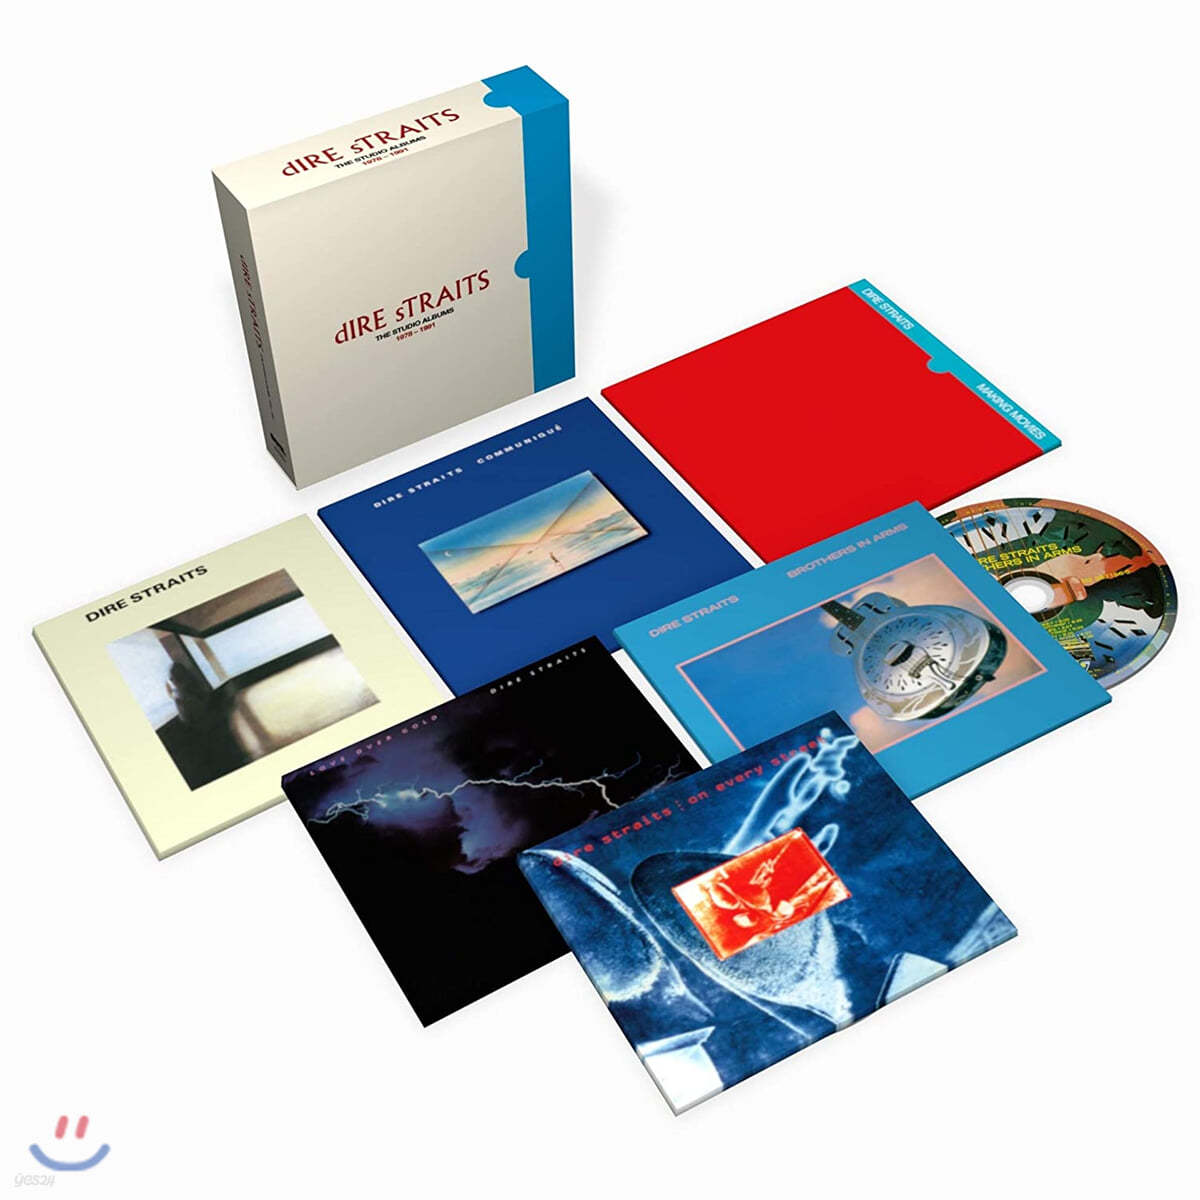 Dire Straits (다이어 스트레이츠) - The Studio Albums 1978 - 1991 